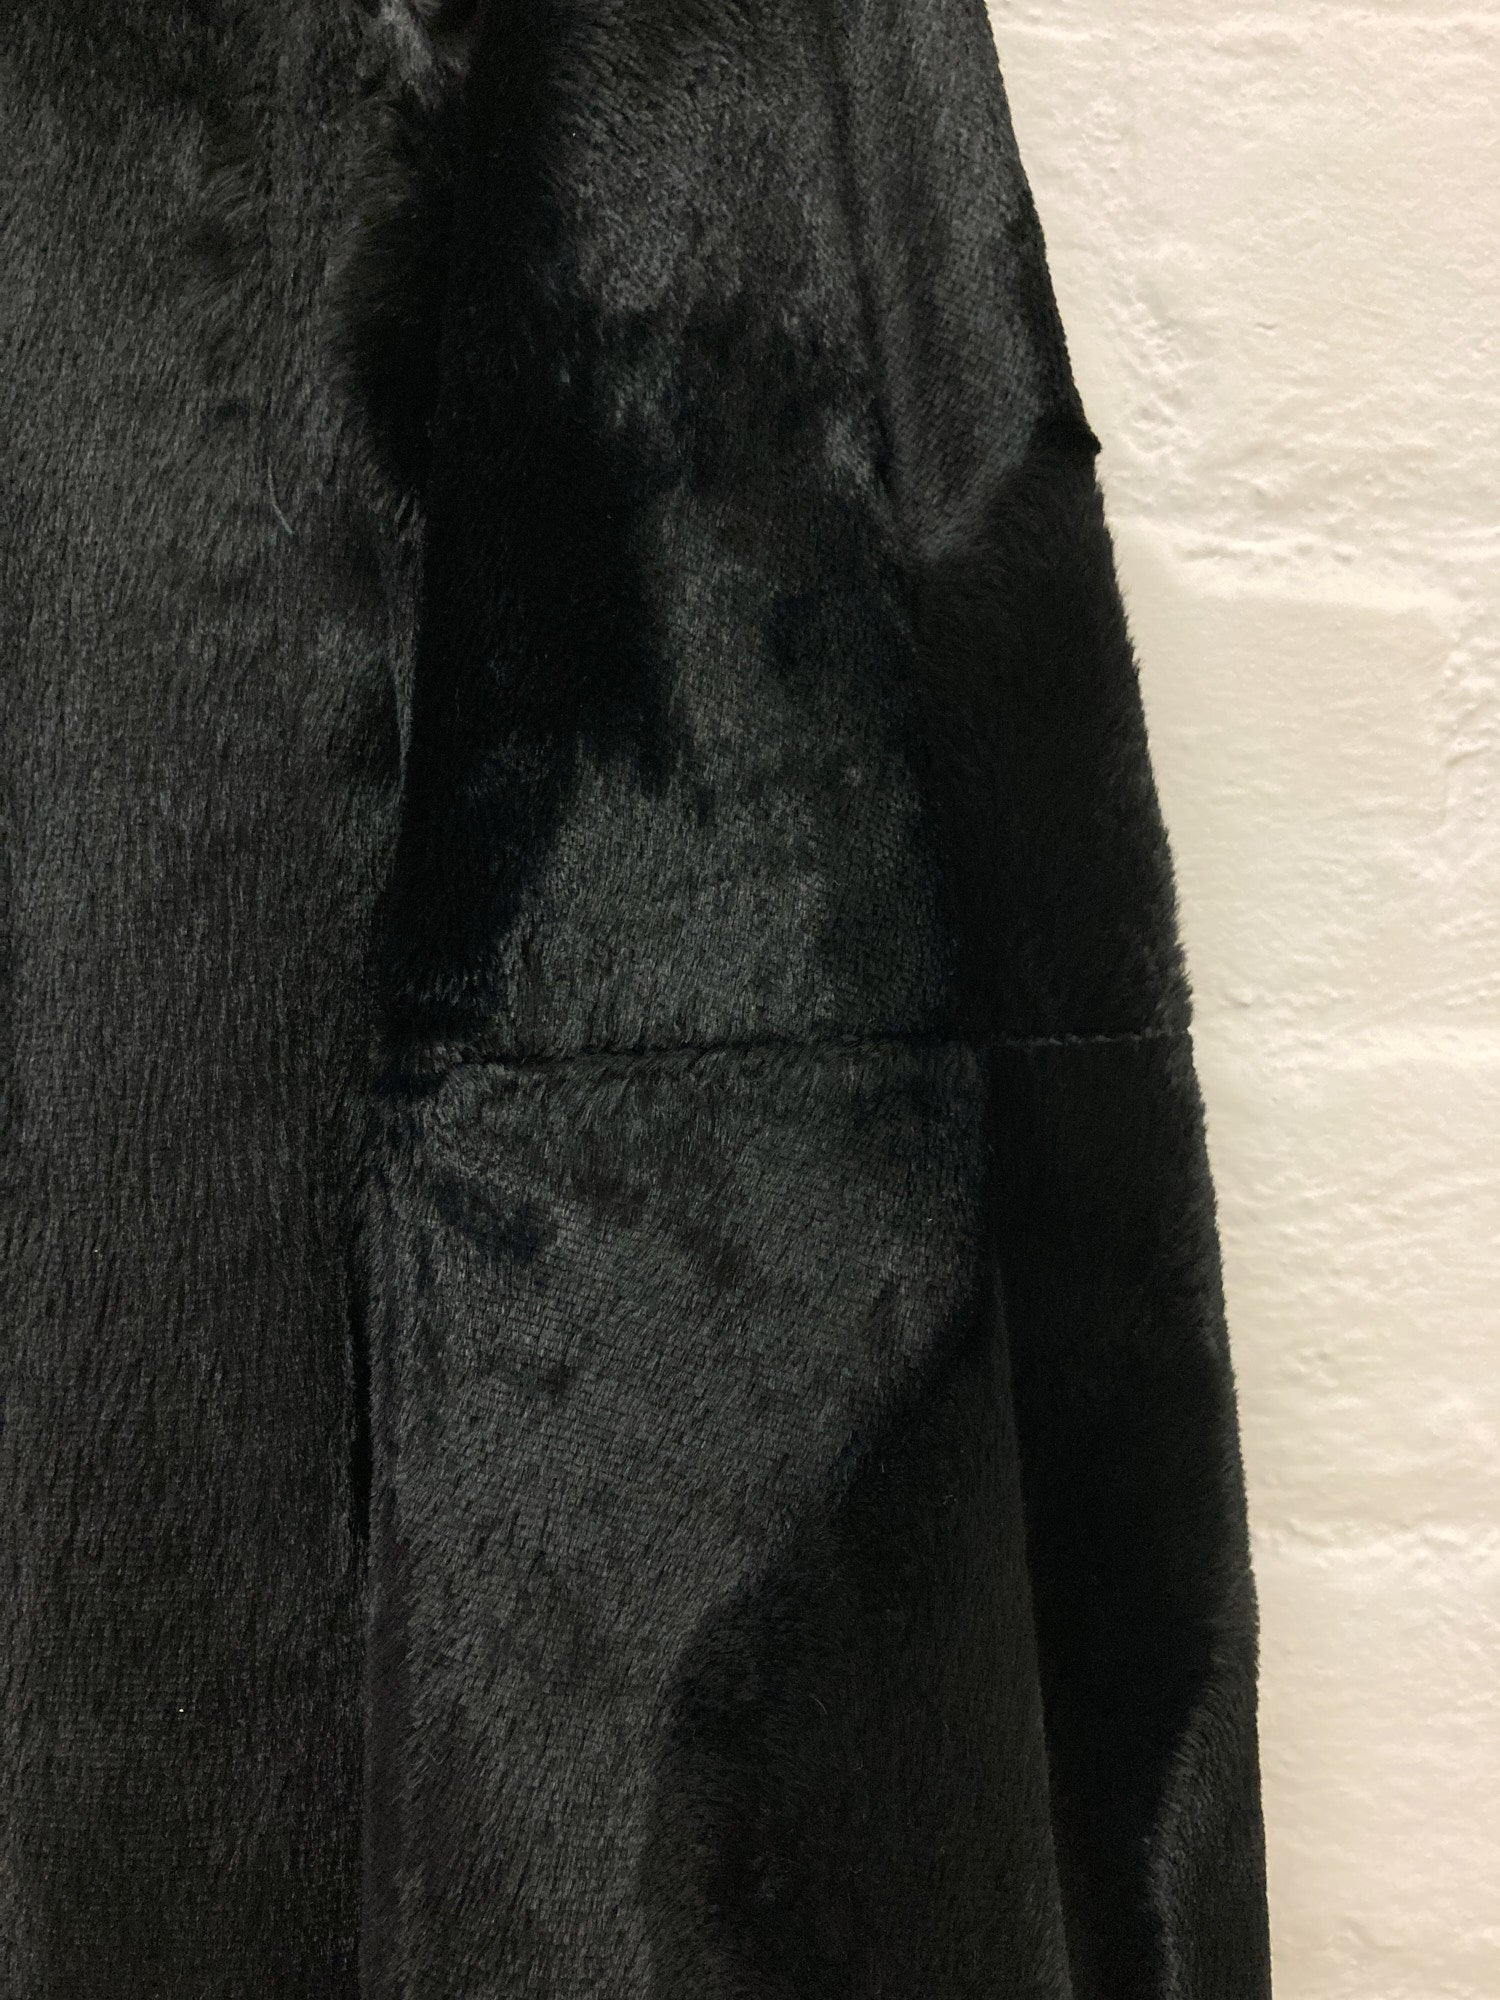 Martine Sitbon 1990s black faux fur high neck stand collar coat - womens 38